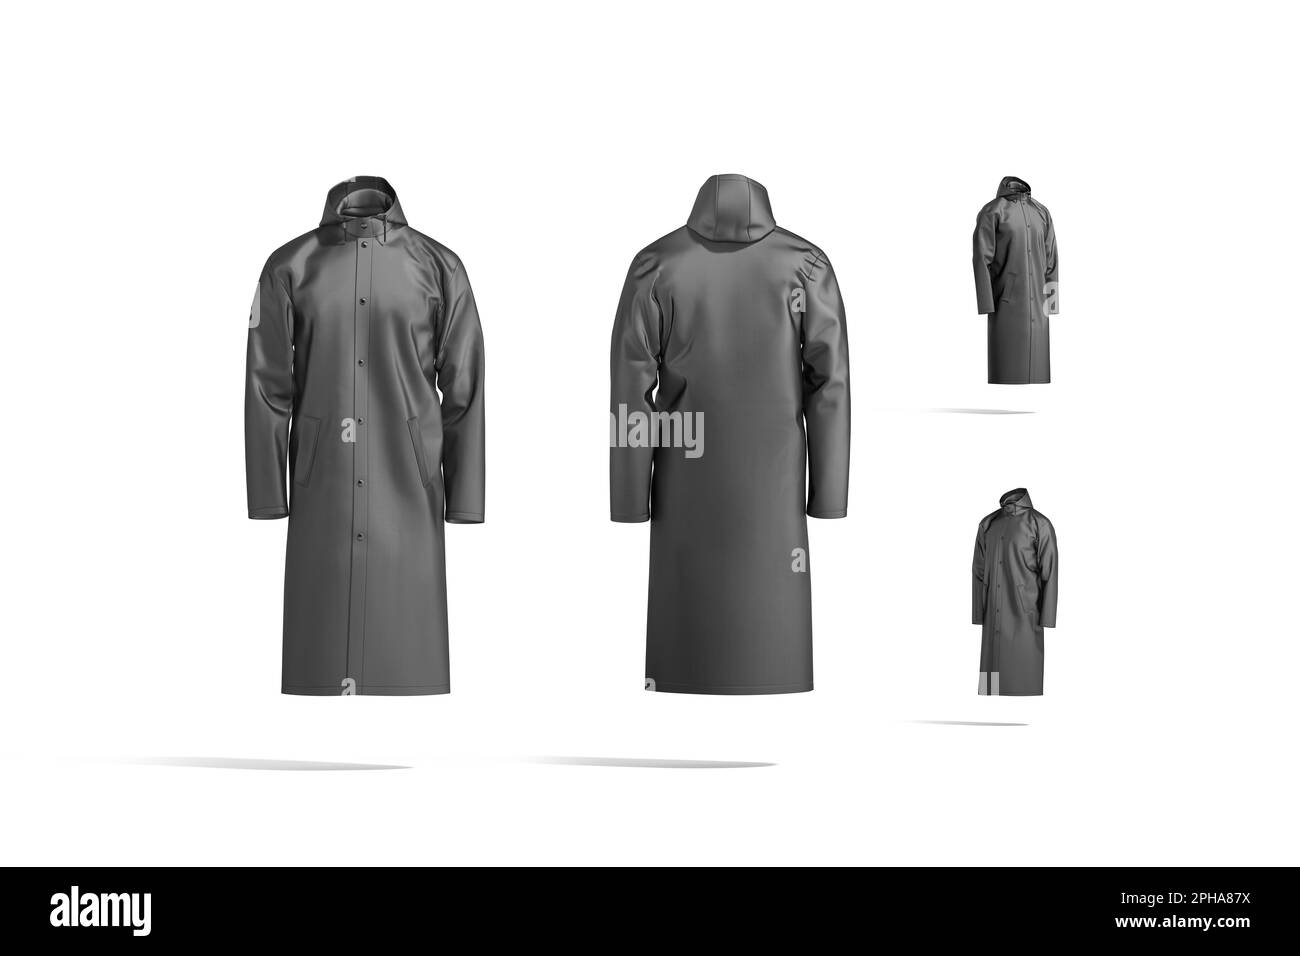 Blank black protective raincoat mockup, different views Stock Photo